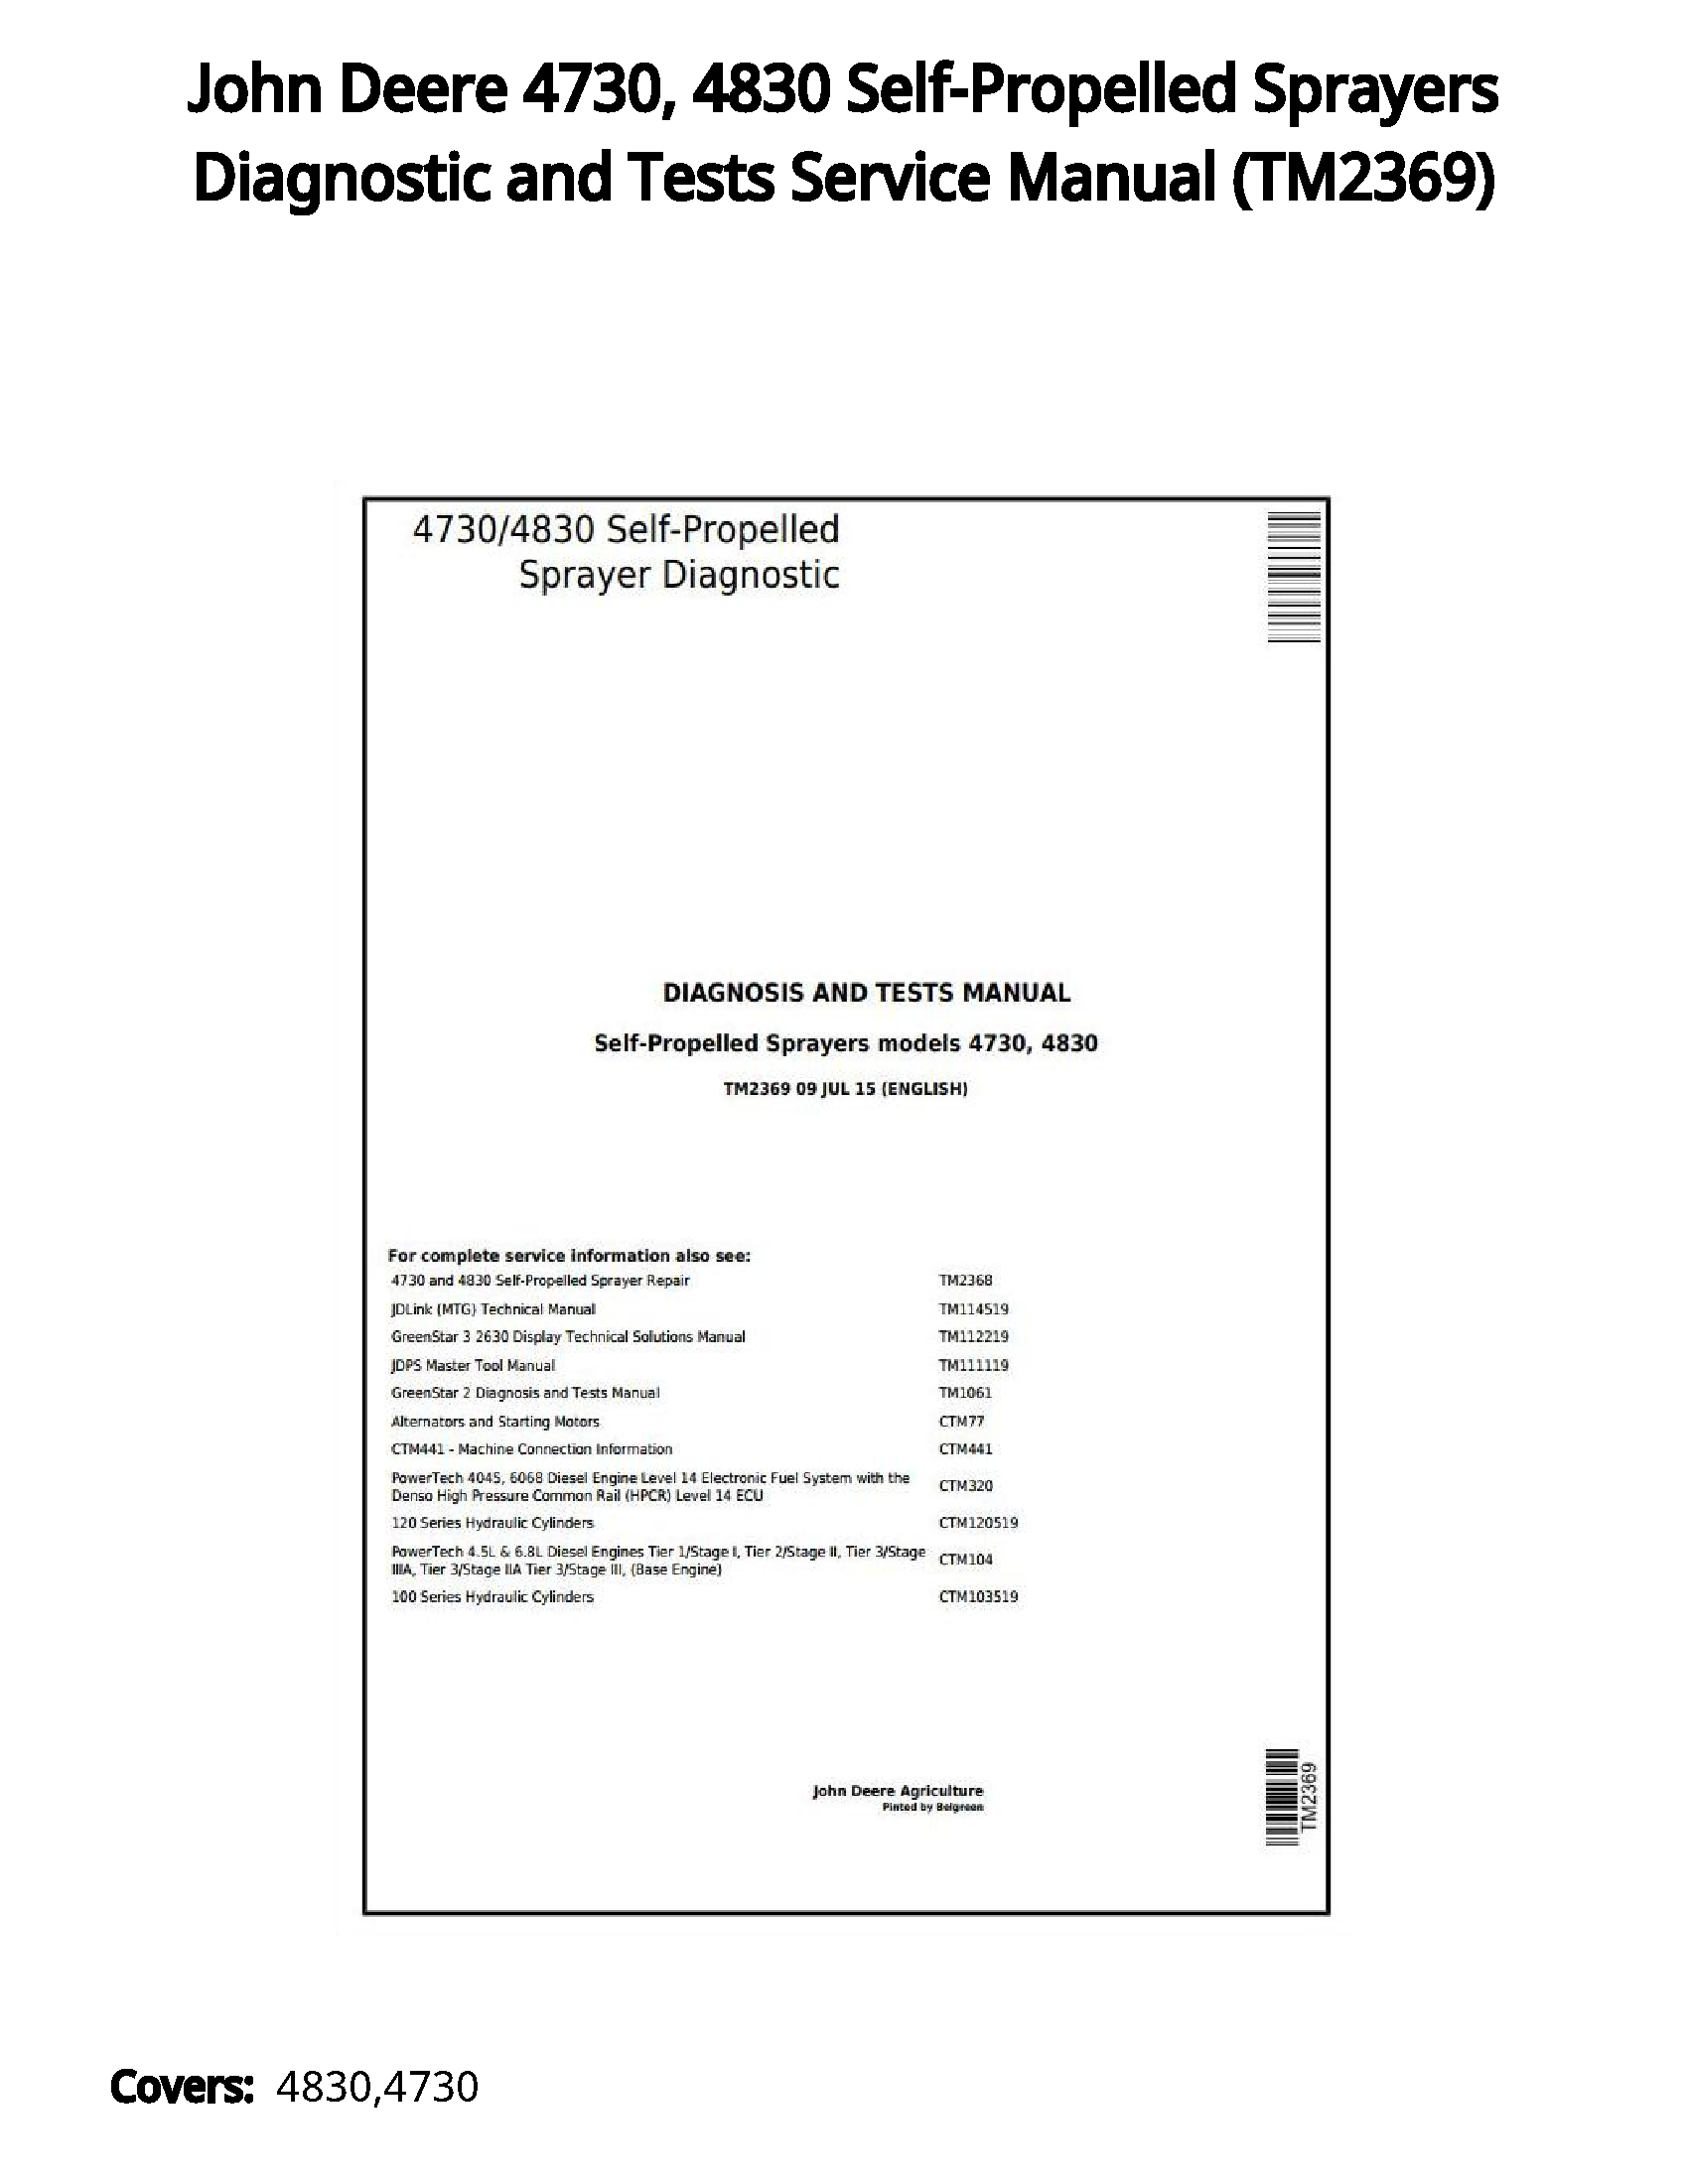 John Deere 4730  4830 Self-Propelled Sprayers Diagnostic and Tests Service Manual - TM2369